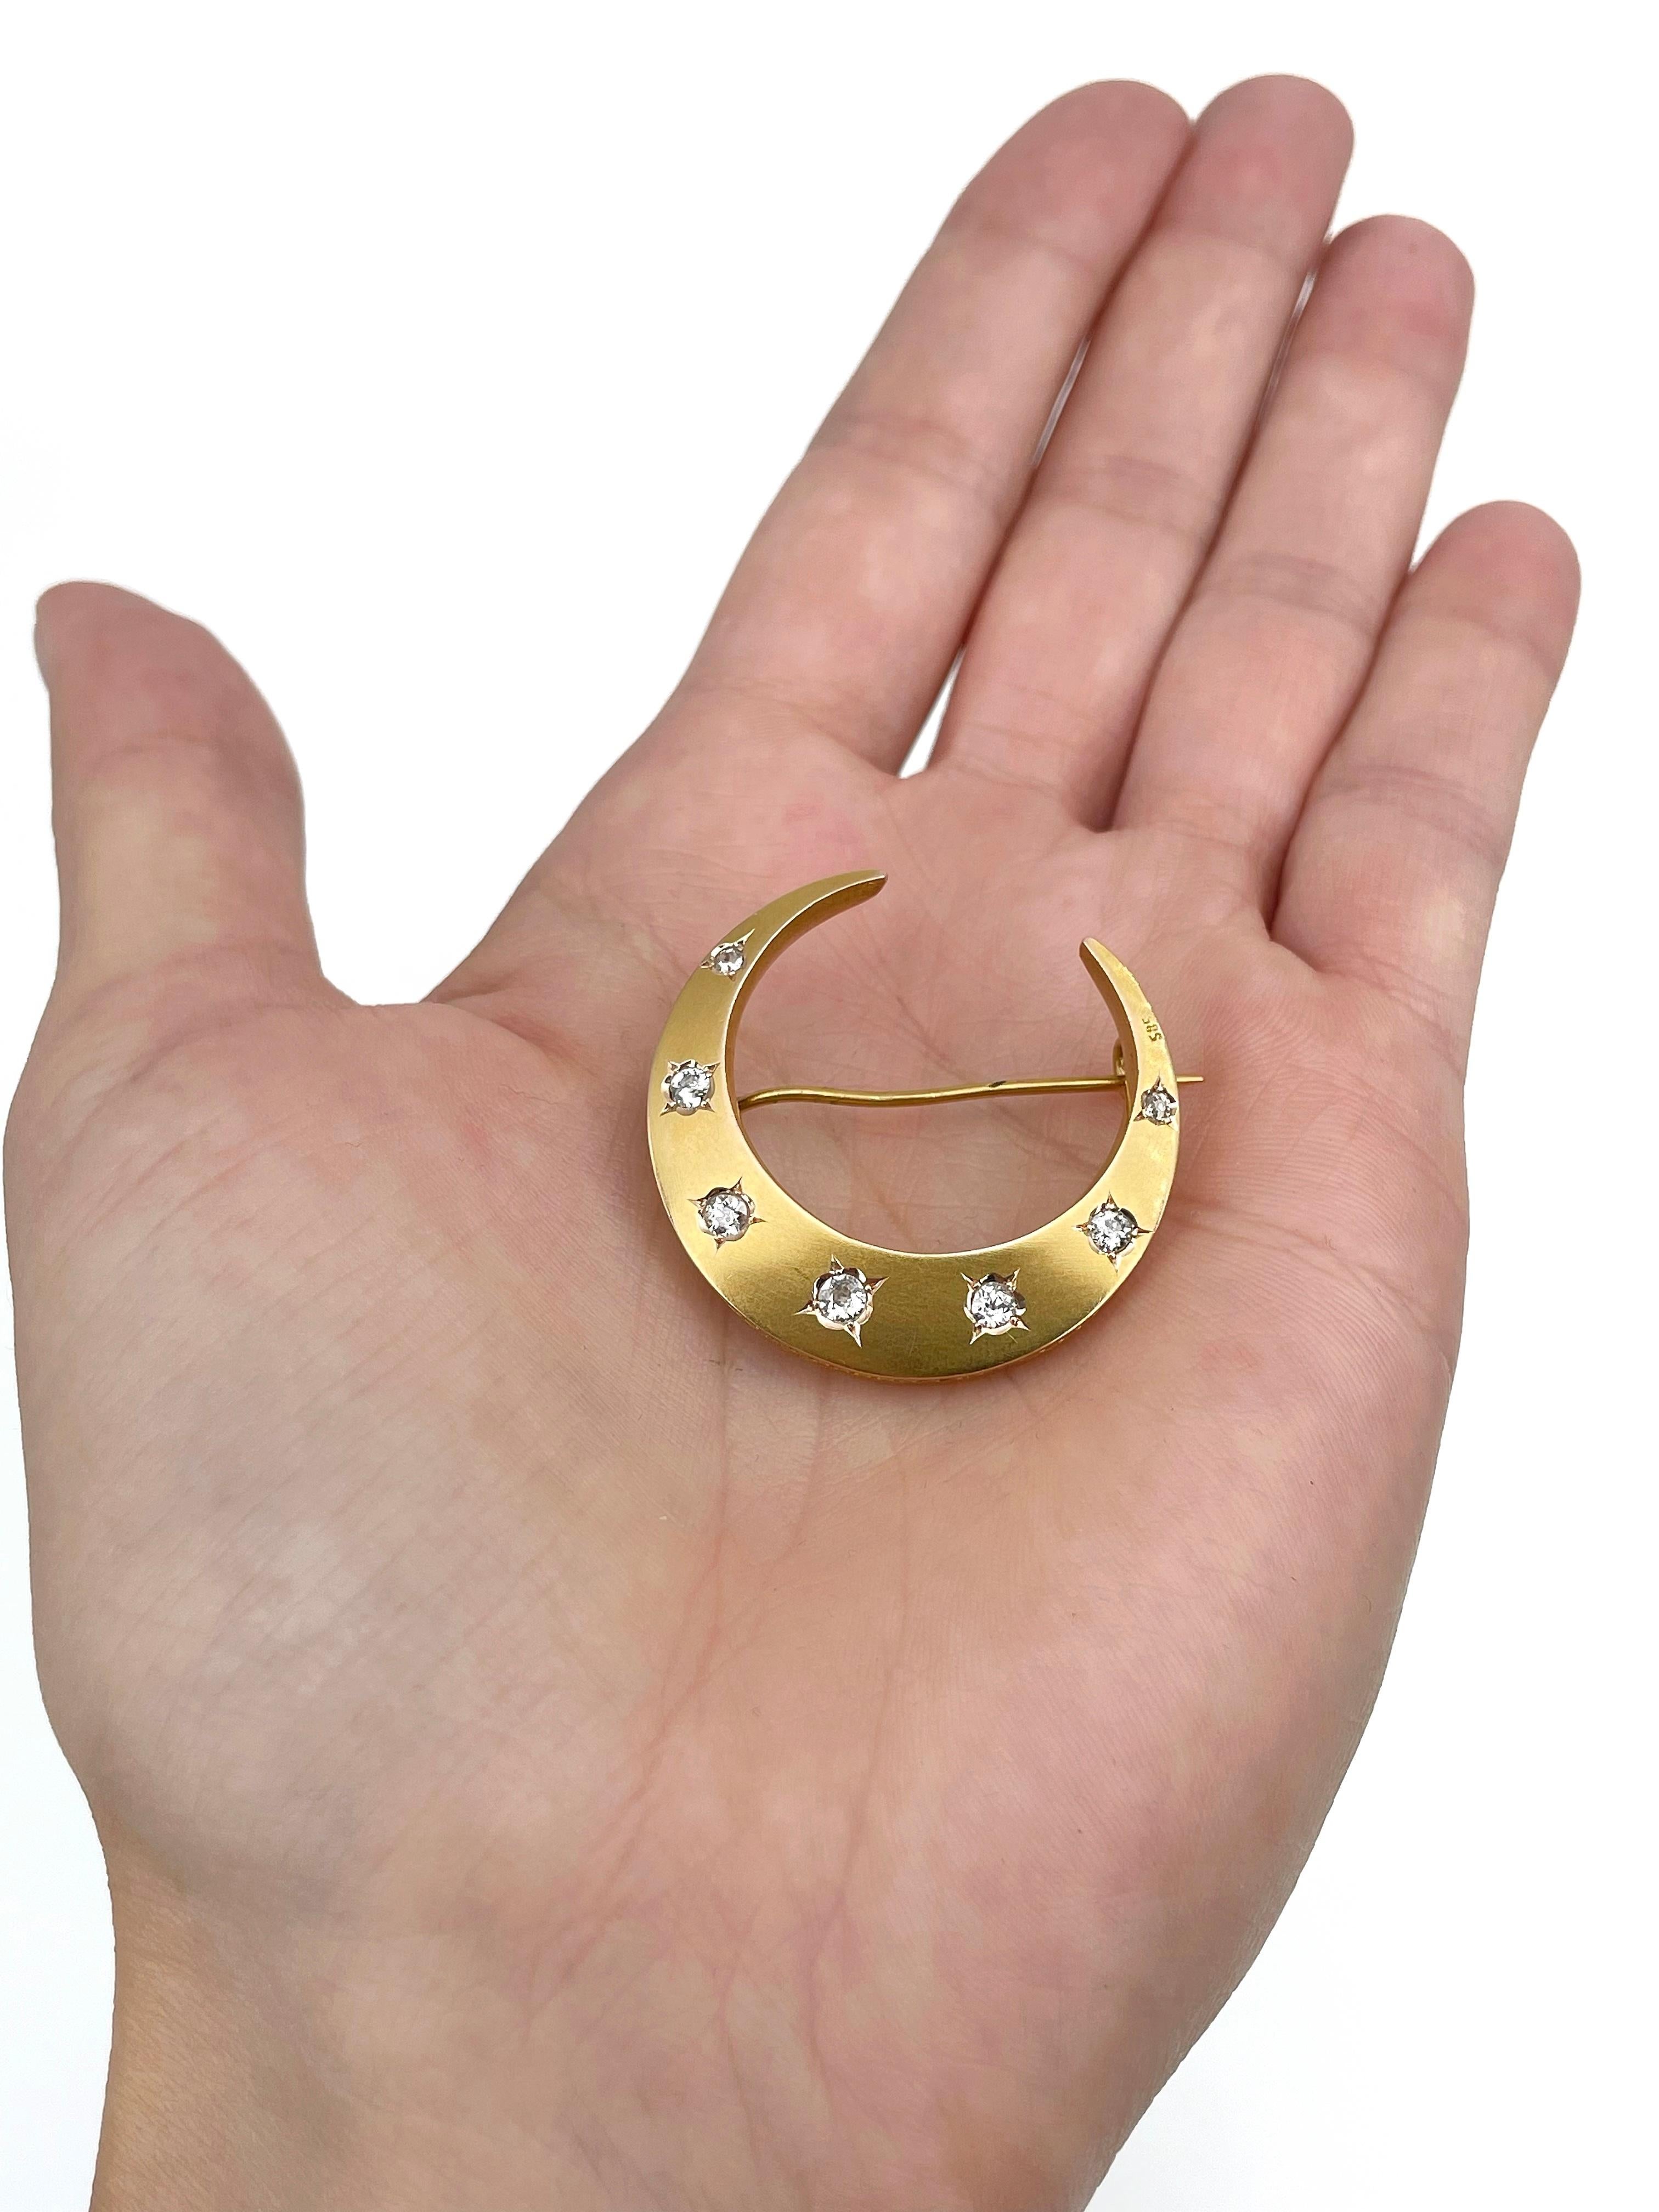 Antique Victorian 14 Karat Yellow Gold Diamond Crescent Moon Pin Brooch 1